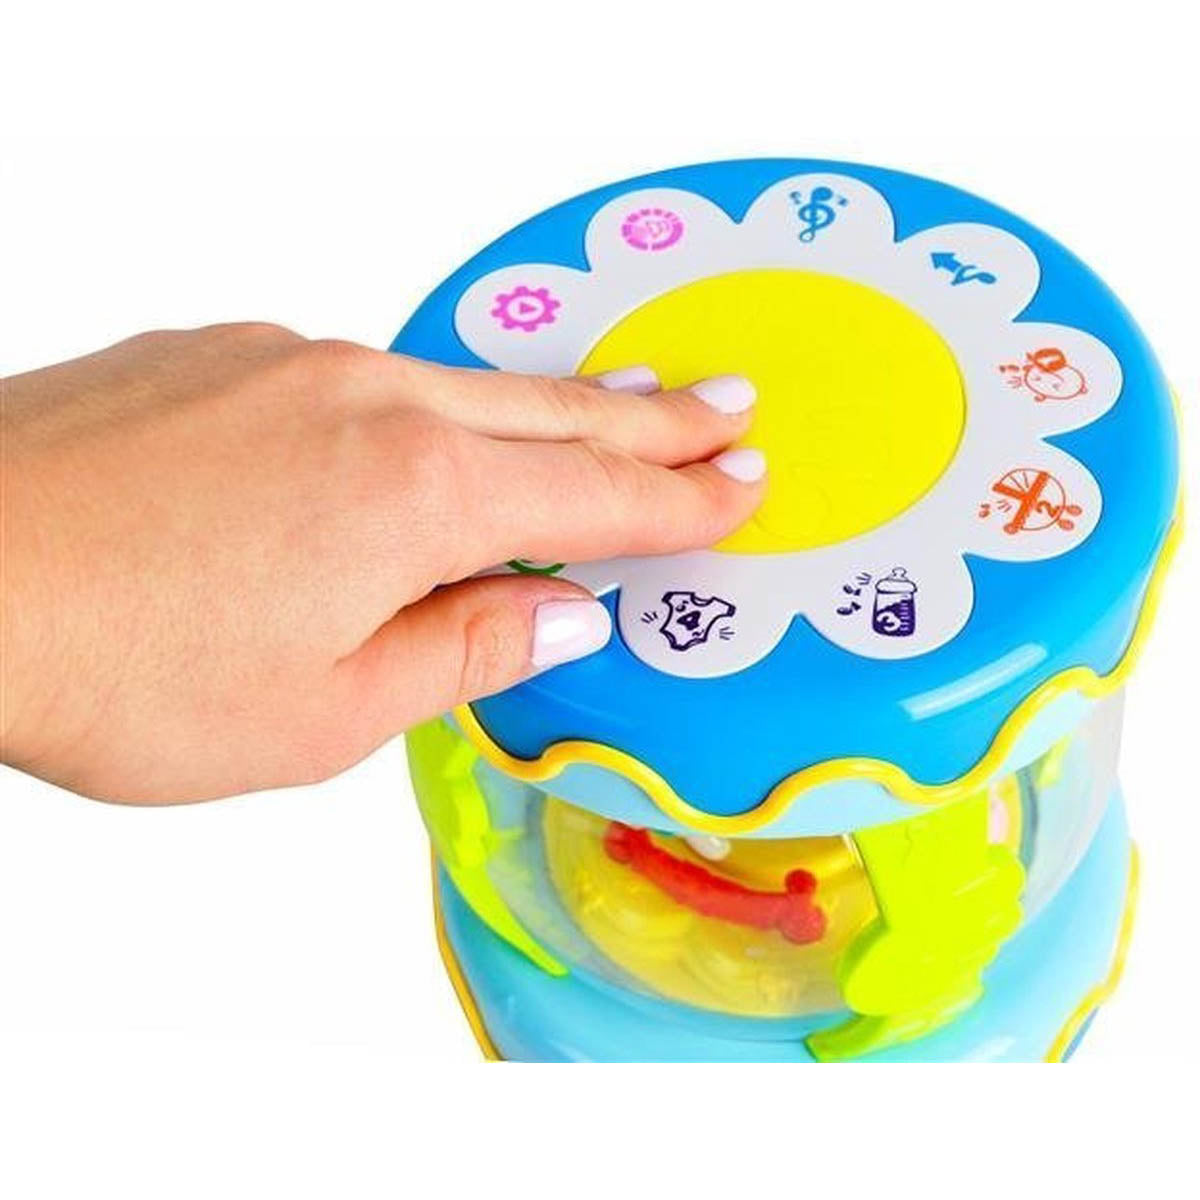 <tc>Ariko</tc> Music Drum Carousel - Musical Learning - Interactive Toys - INCL BATTERIES